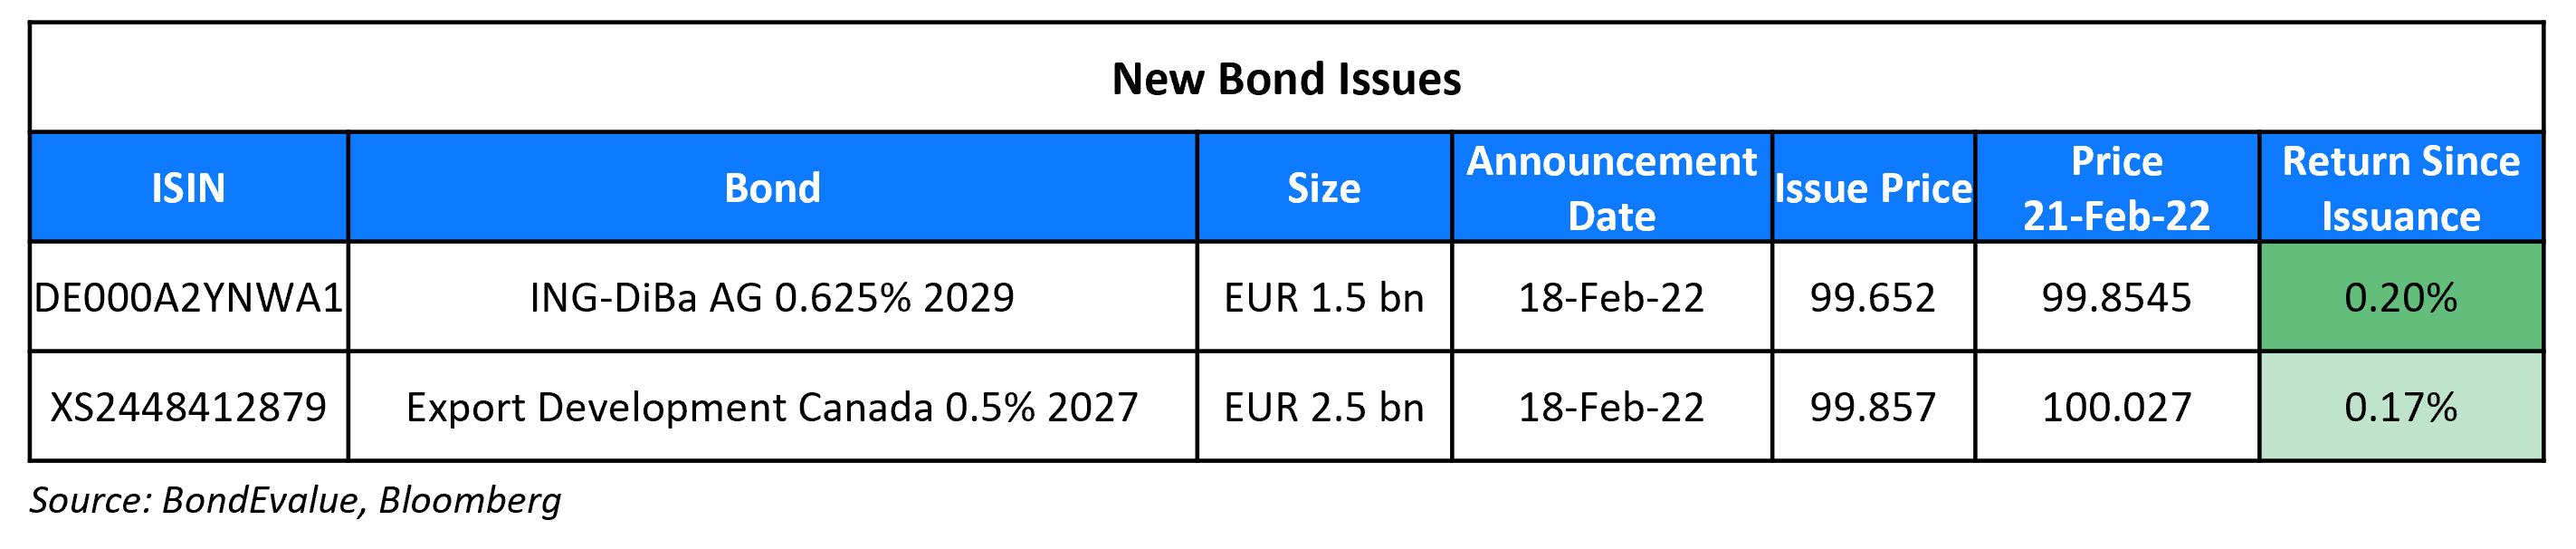 New Bond Issues 21 Feb